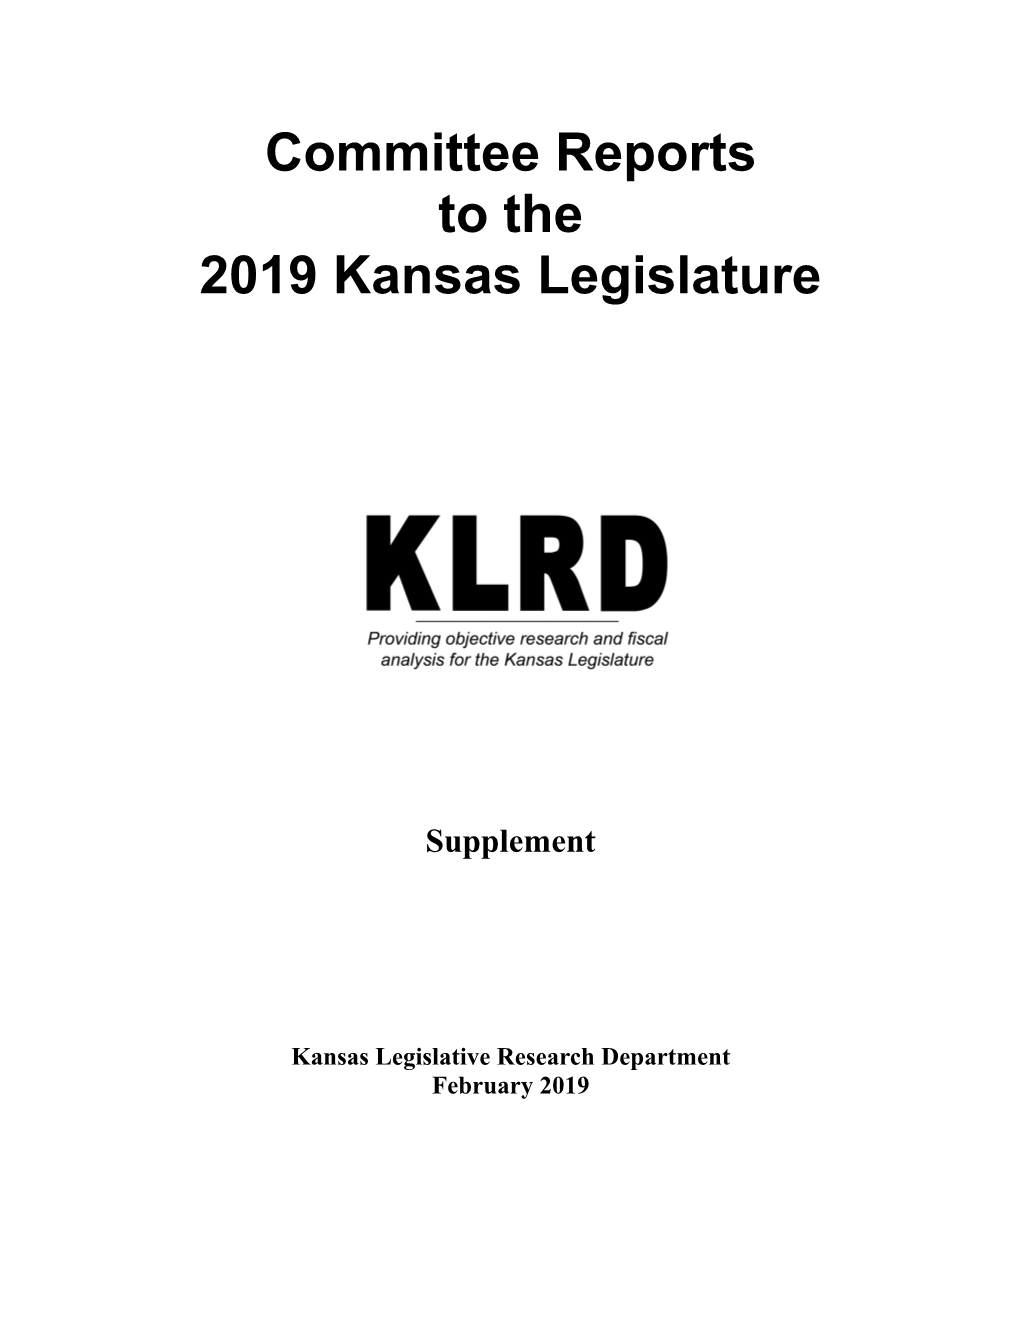 Committee Reports to the 2019 Kansas Legislature